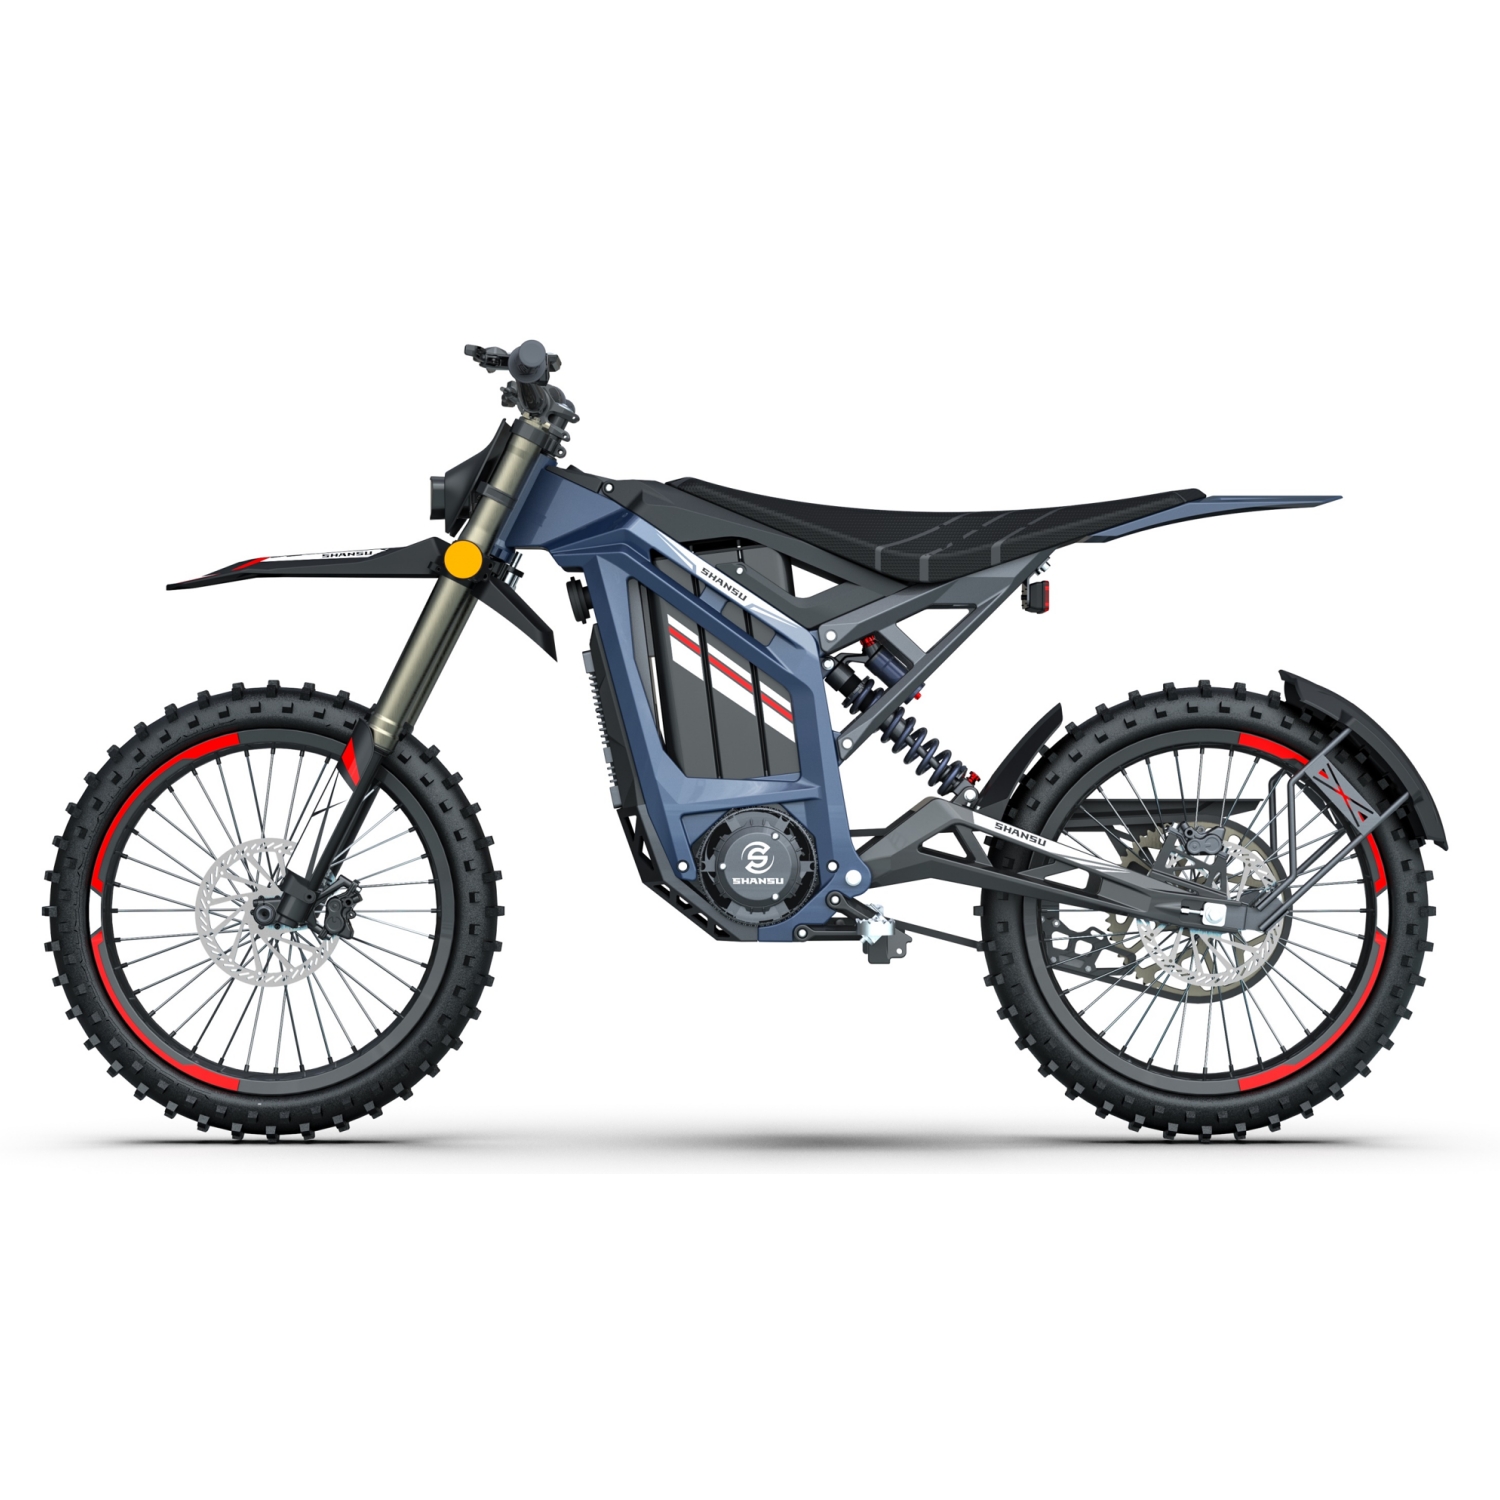 GaeaCycle 8.0 Electric Dirt Bike, 19 Inch Off Road Dirt Motorcycle Ebike, 72V 40Ah Lithium Battery, 6000W Peak Power